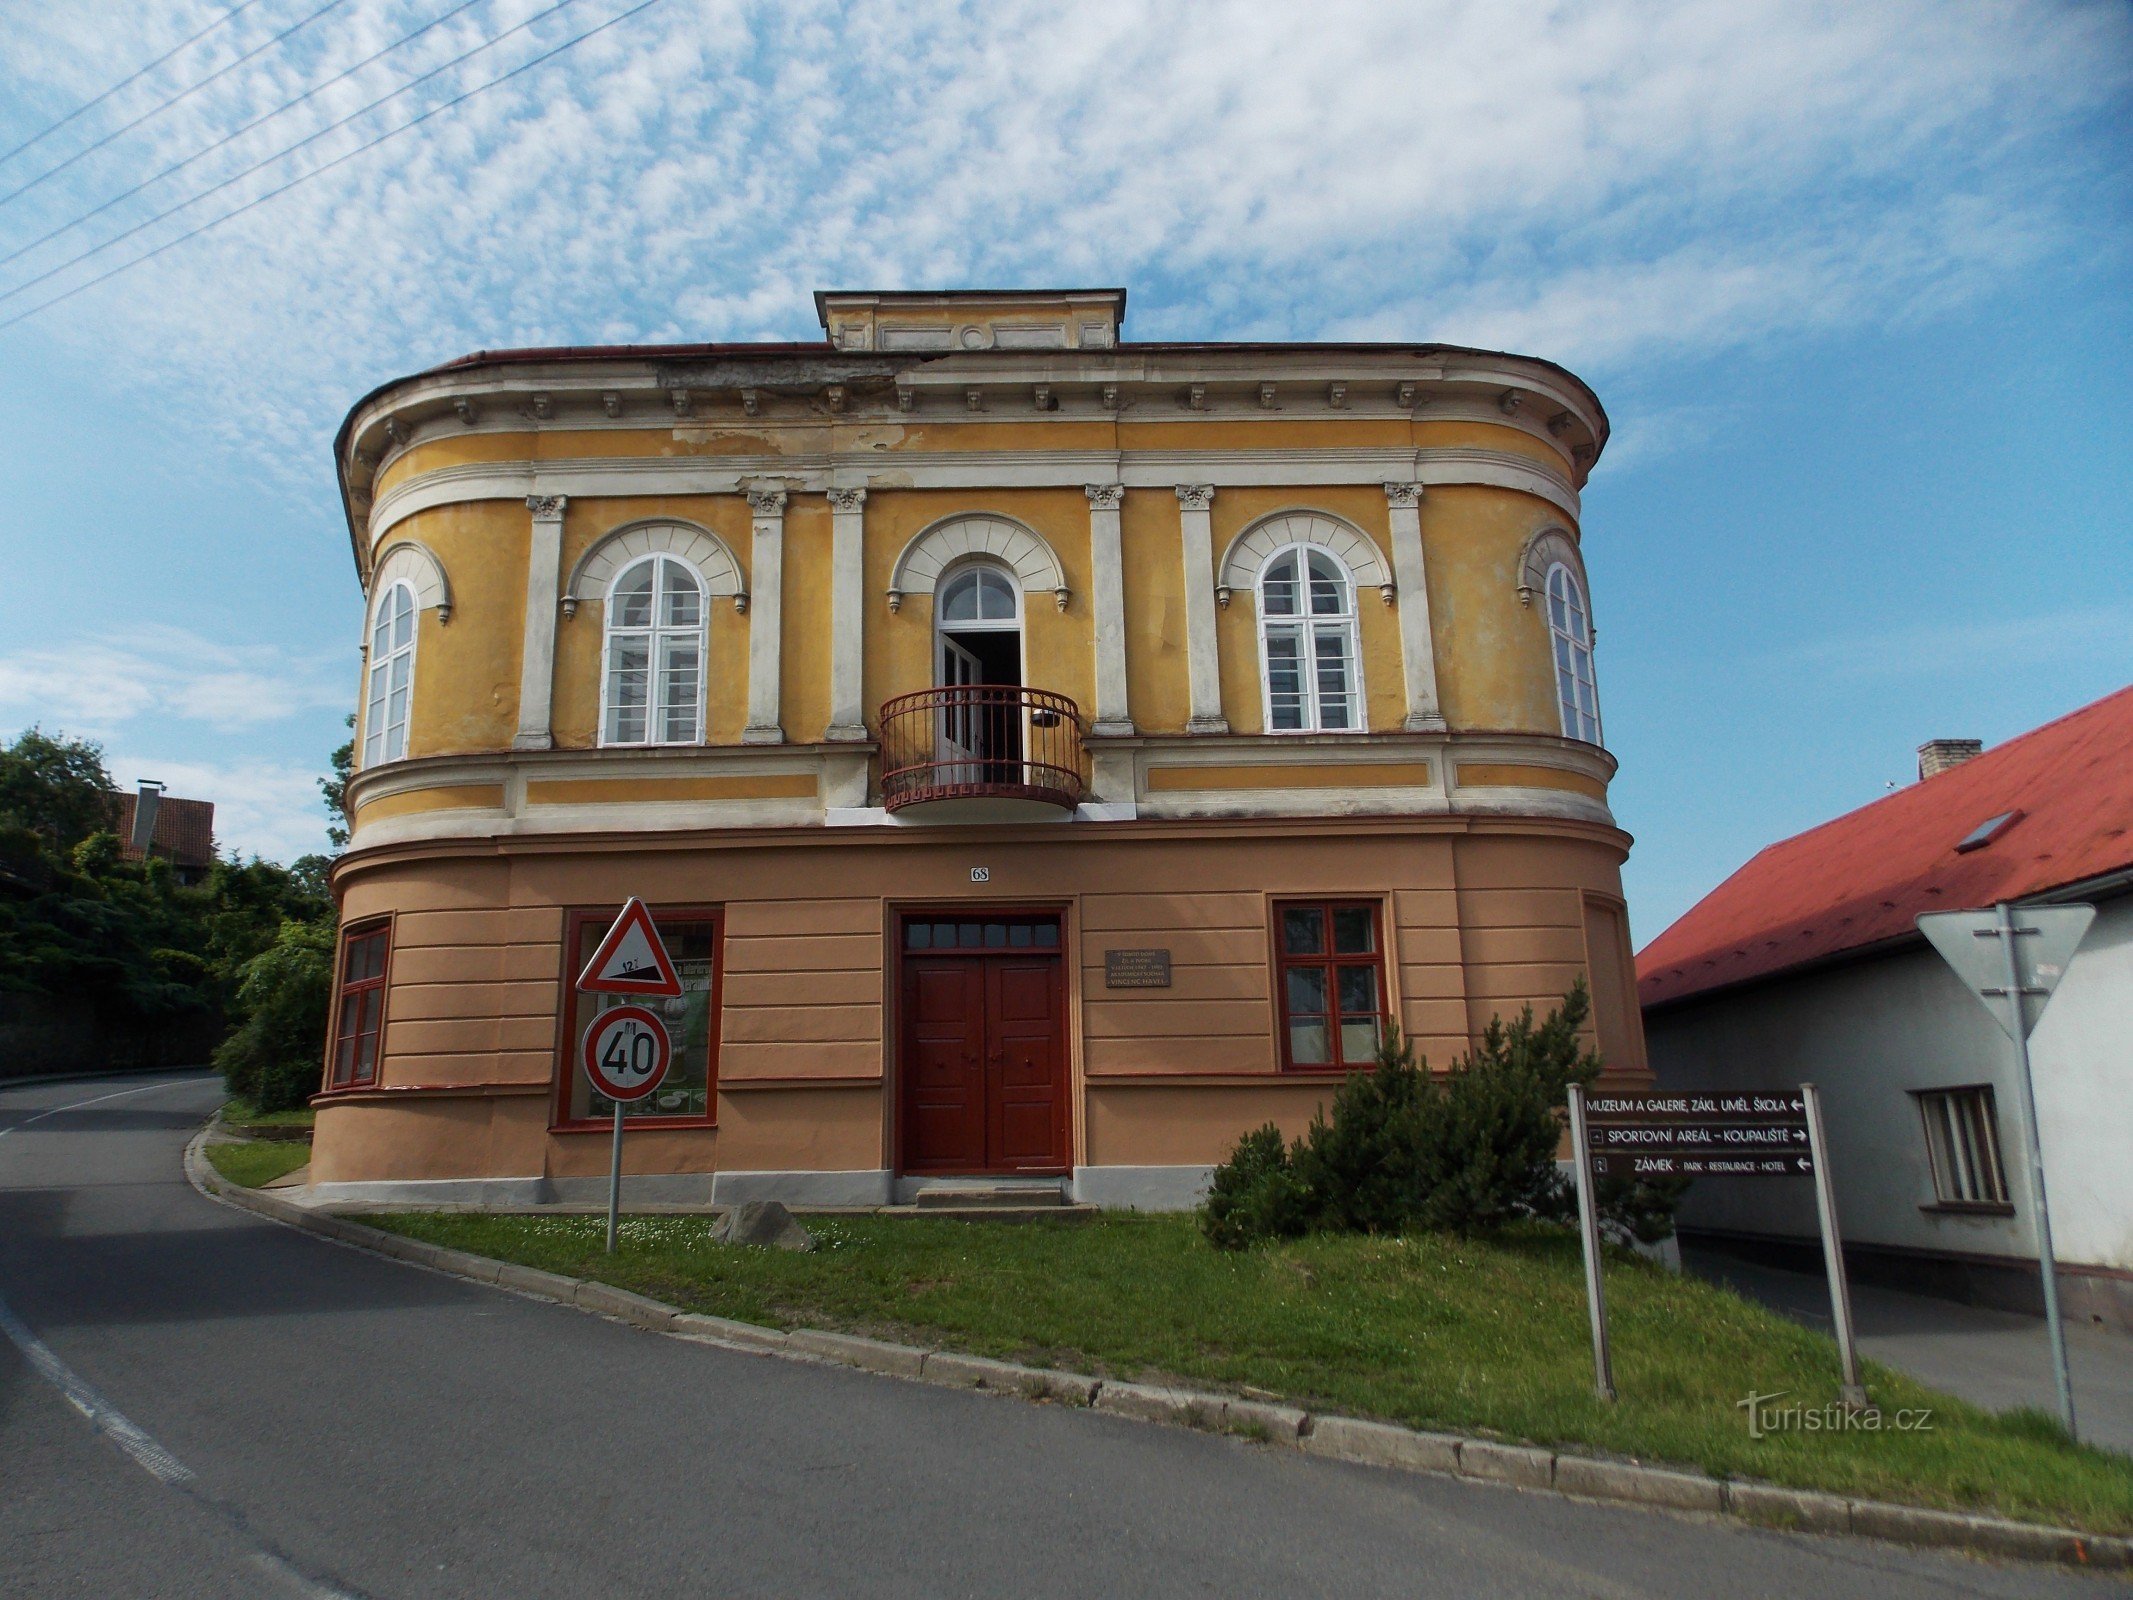 Interesting house in Hradec nad Moravicí